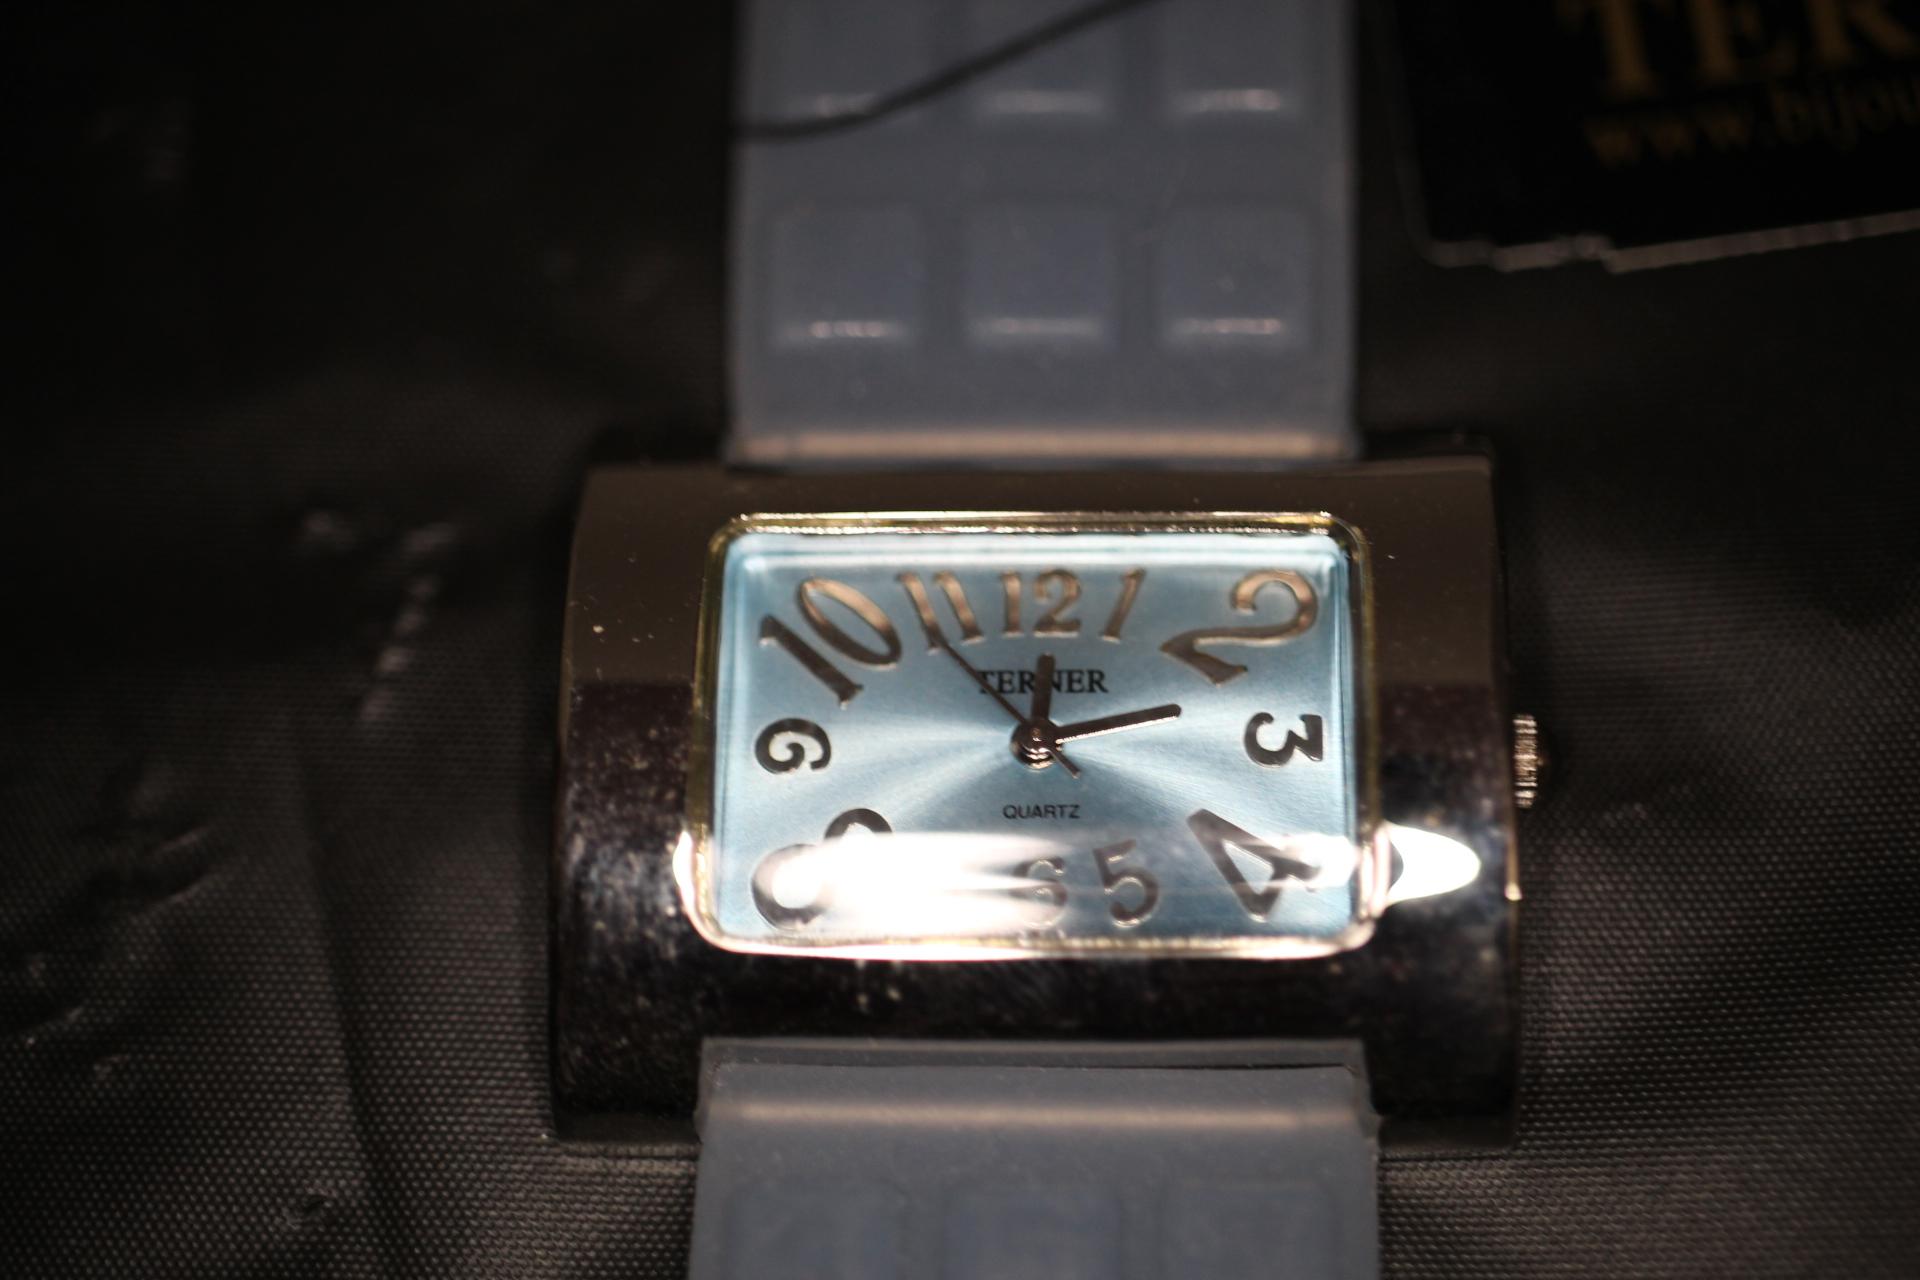 Bijoux Terner Quartz Watch & Case, Rubber Band, 8 1/2"